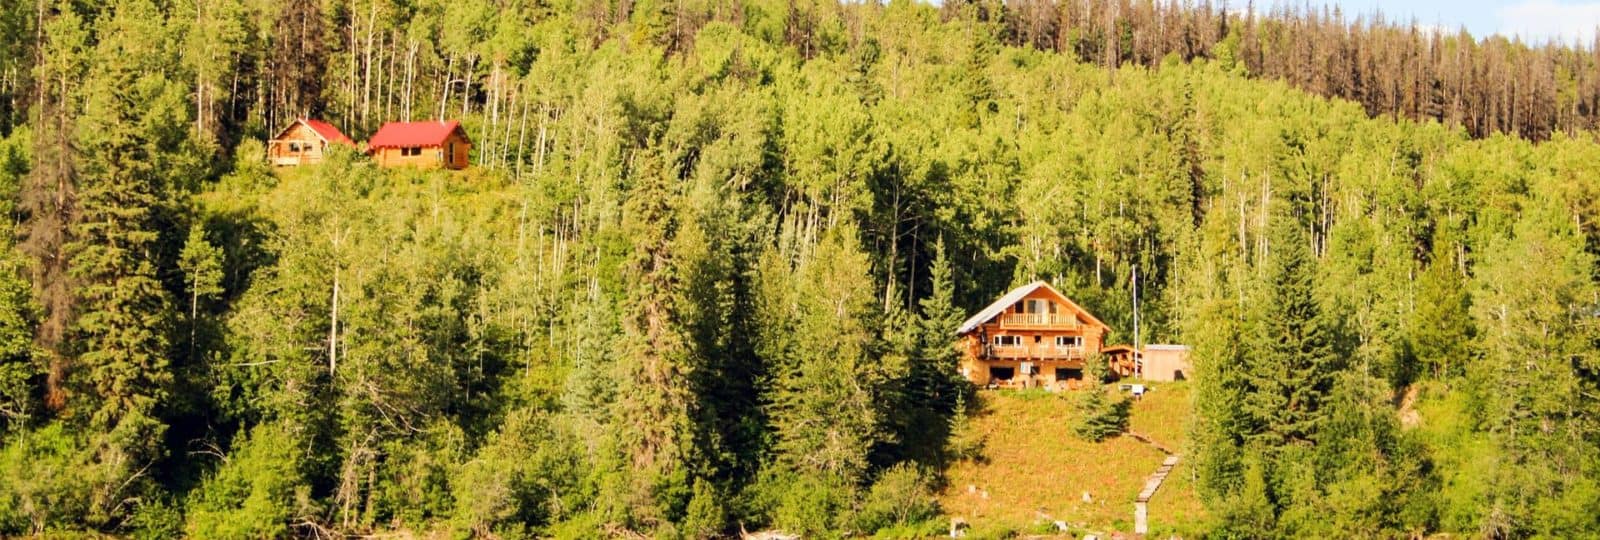 Lodge-Abenteuer in Westkanadas Natur